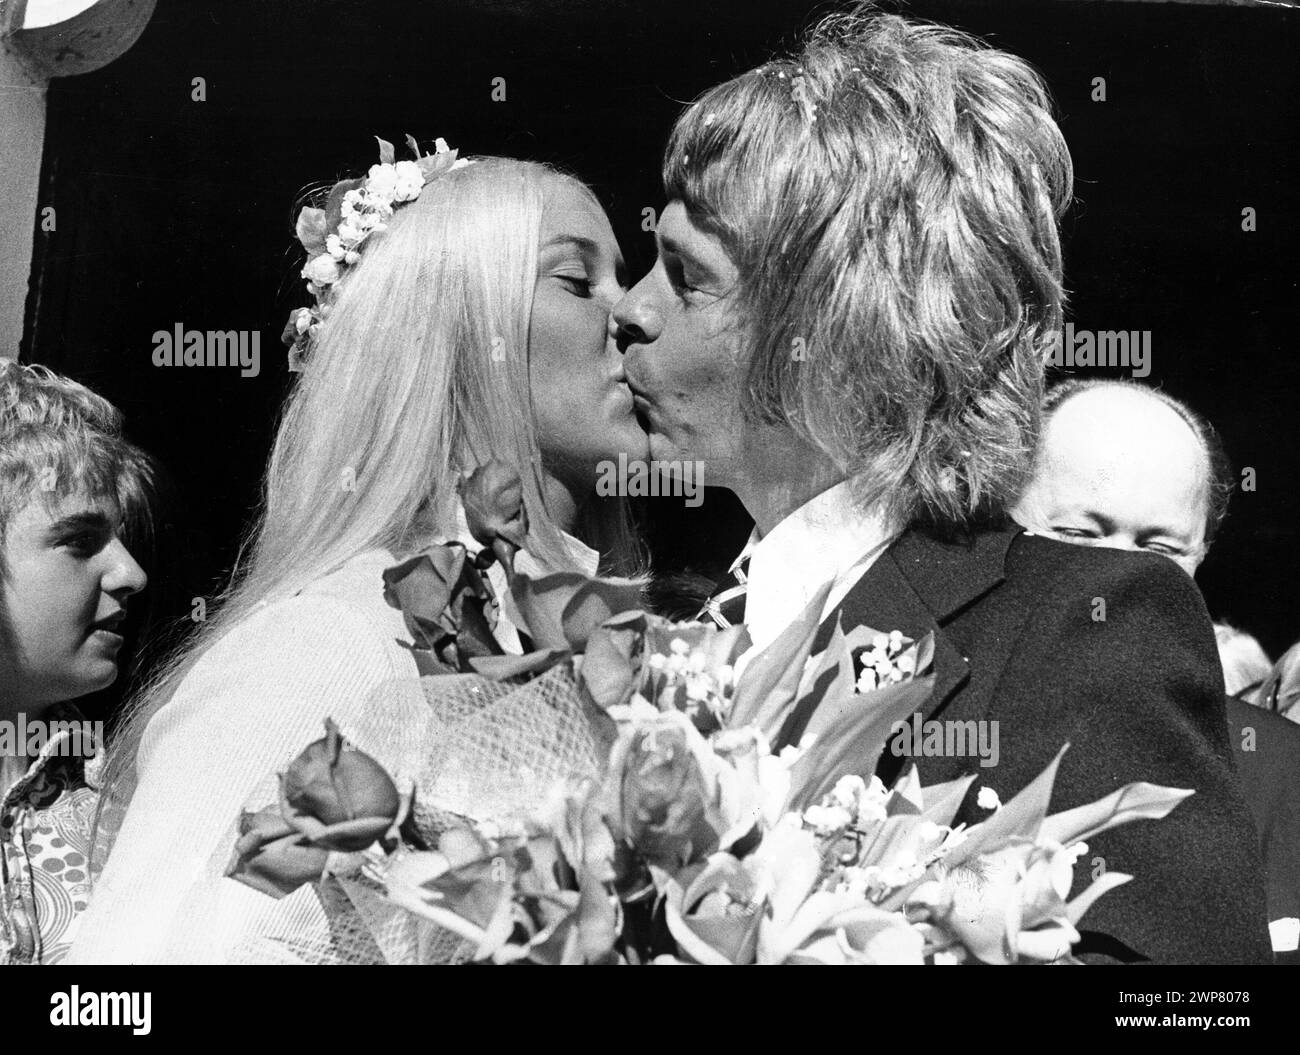 Björn Ulvaeus and Agnetha Fältskog wedding in Verum Church in Verum, Sweden, on July 6, 1971.Photo: Staffan Johansson / Sydsvenskan / TT code 2503 Stock Photo